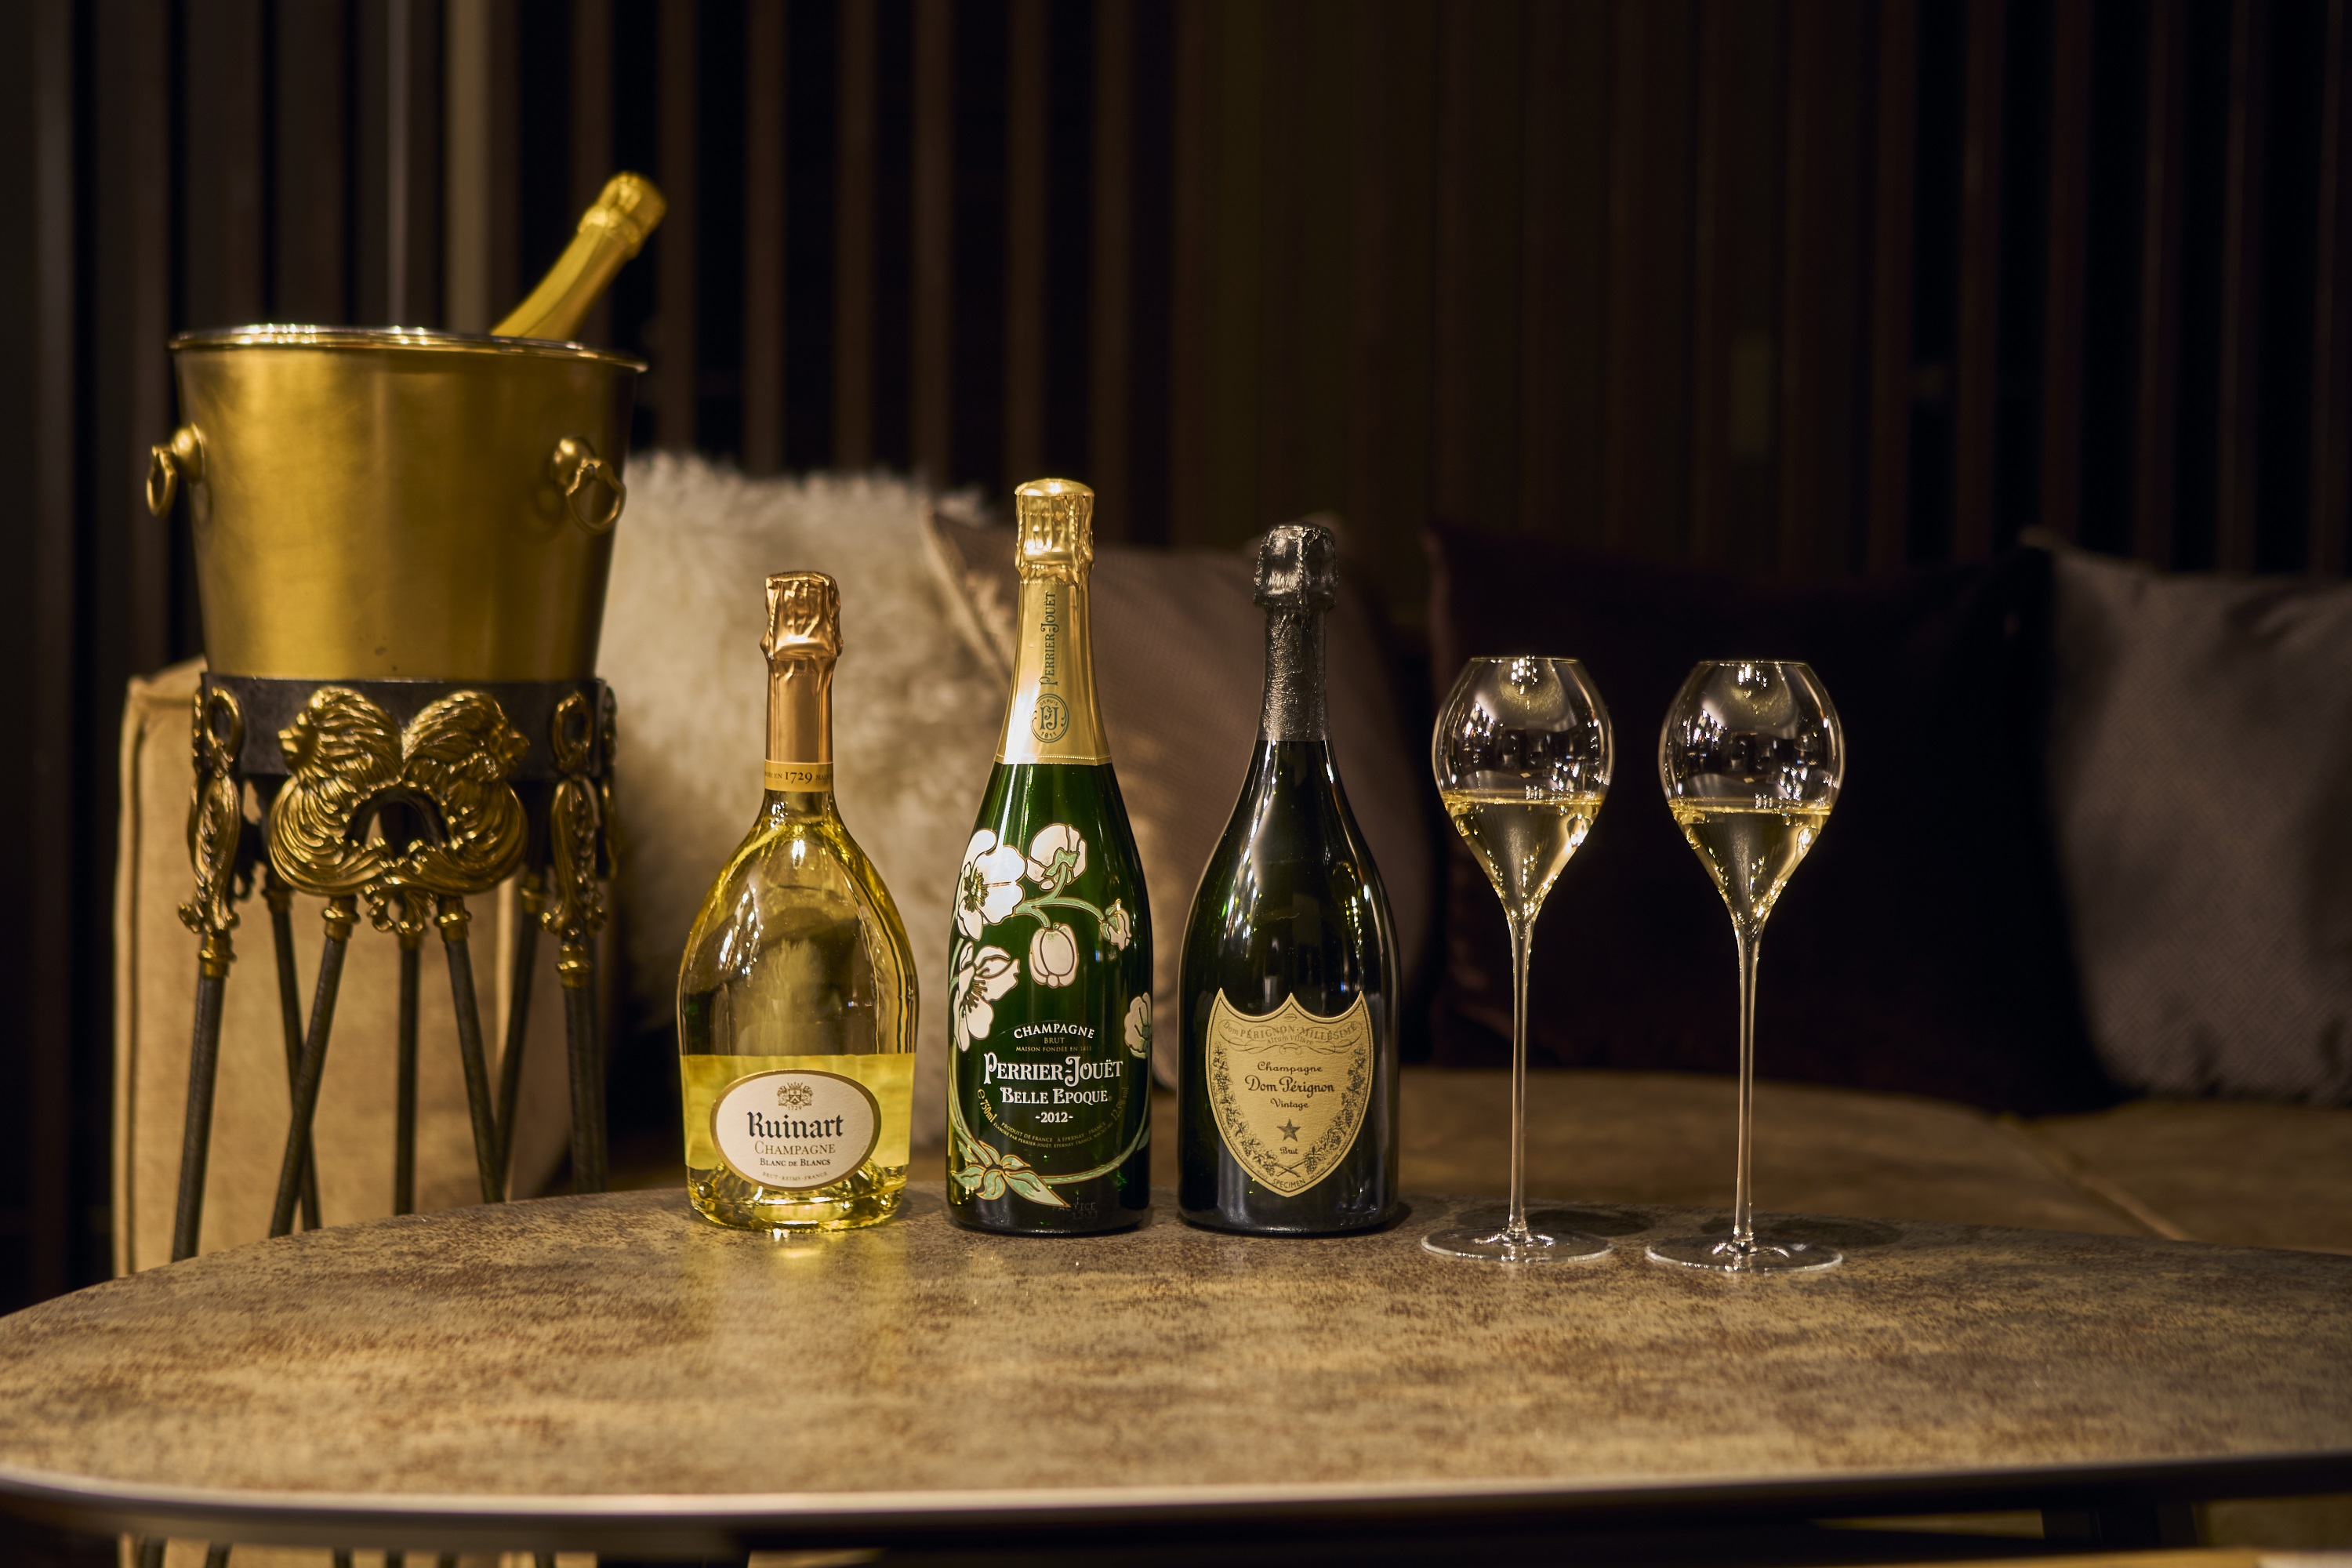 Bar Hotel箱根香山 Champagne Suite Roomが誕生 シャンパーニュを贅沢に嗜んで シマダグループのプレスリリース